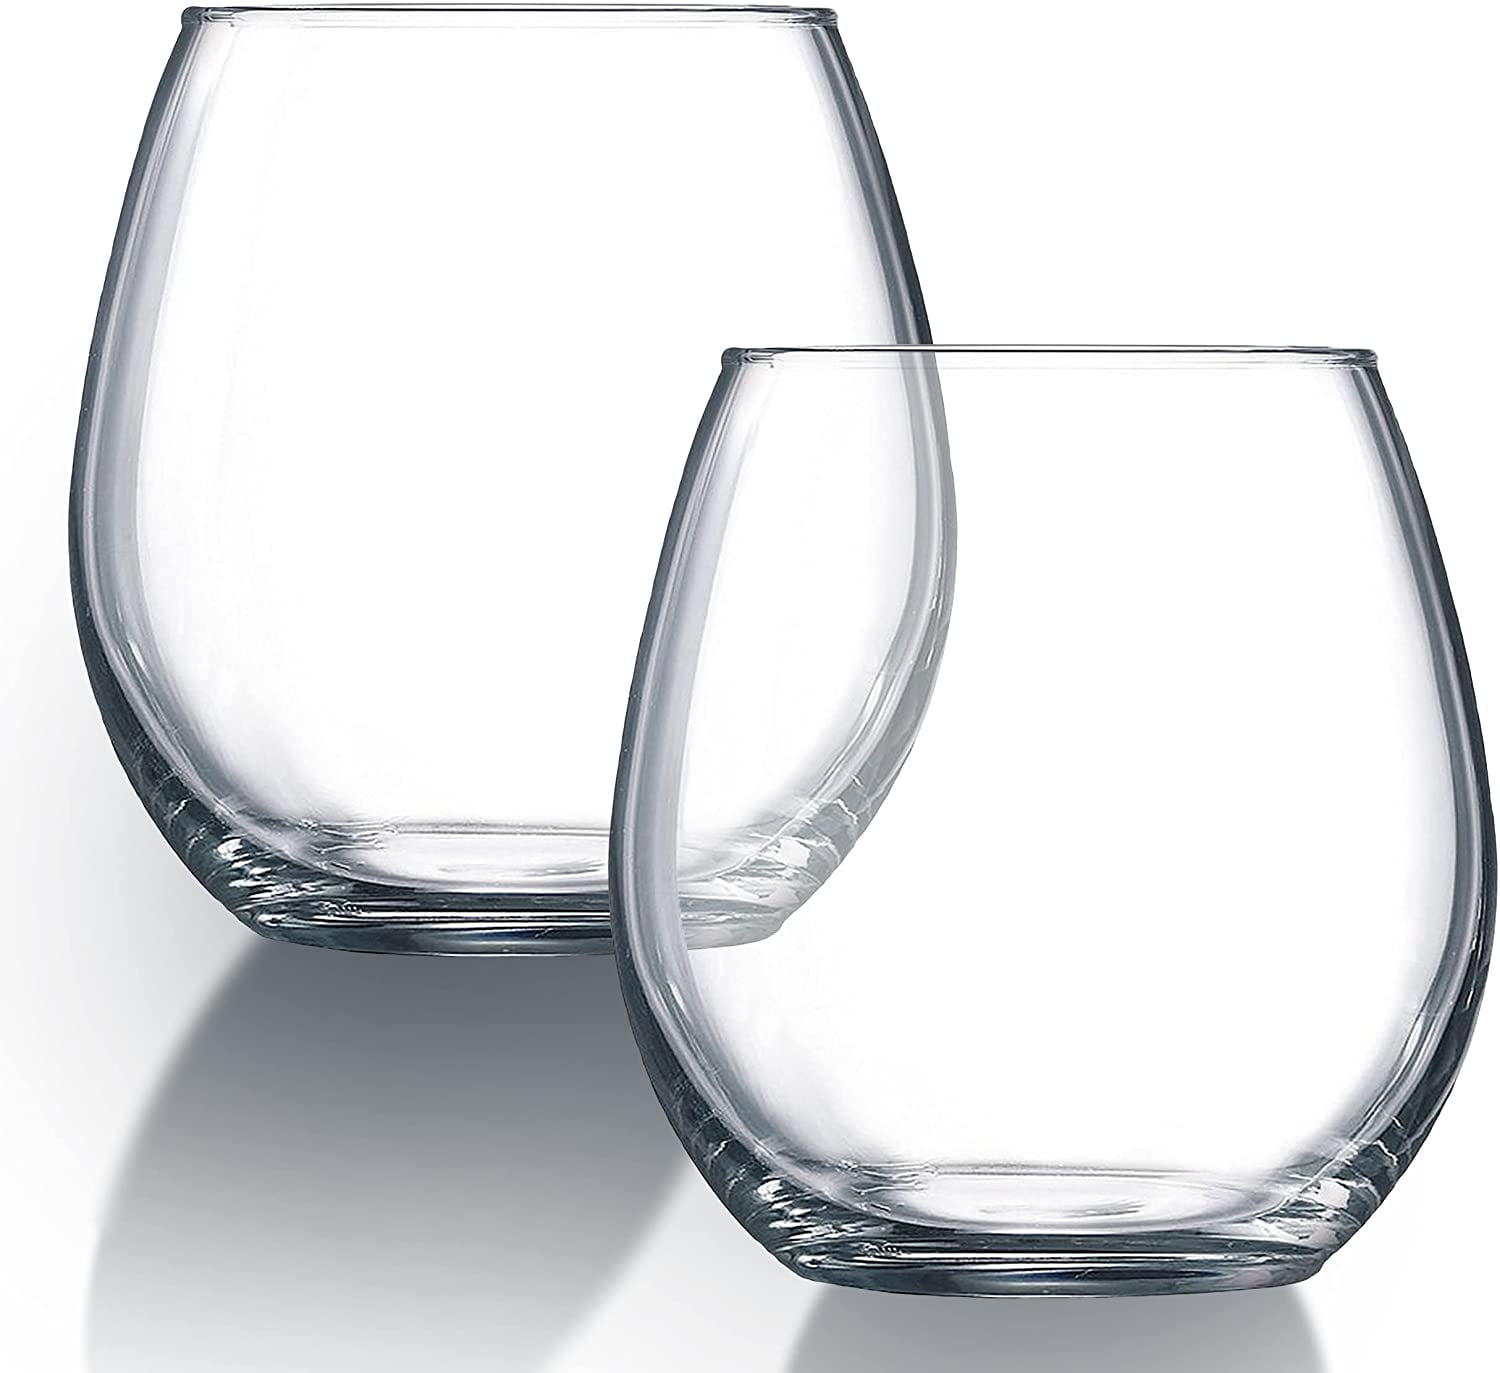 Chefs Star Shatter-Resistant Stemless Wine Glass Set 12 Pack 